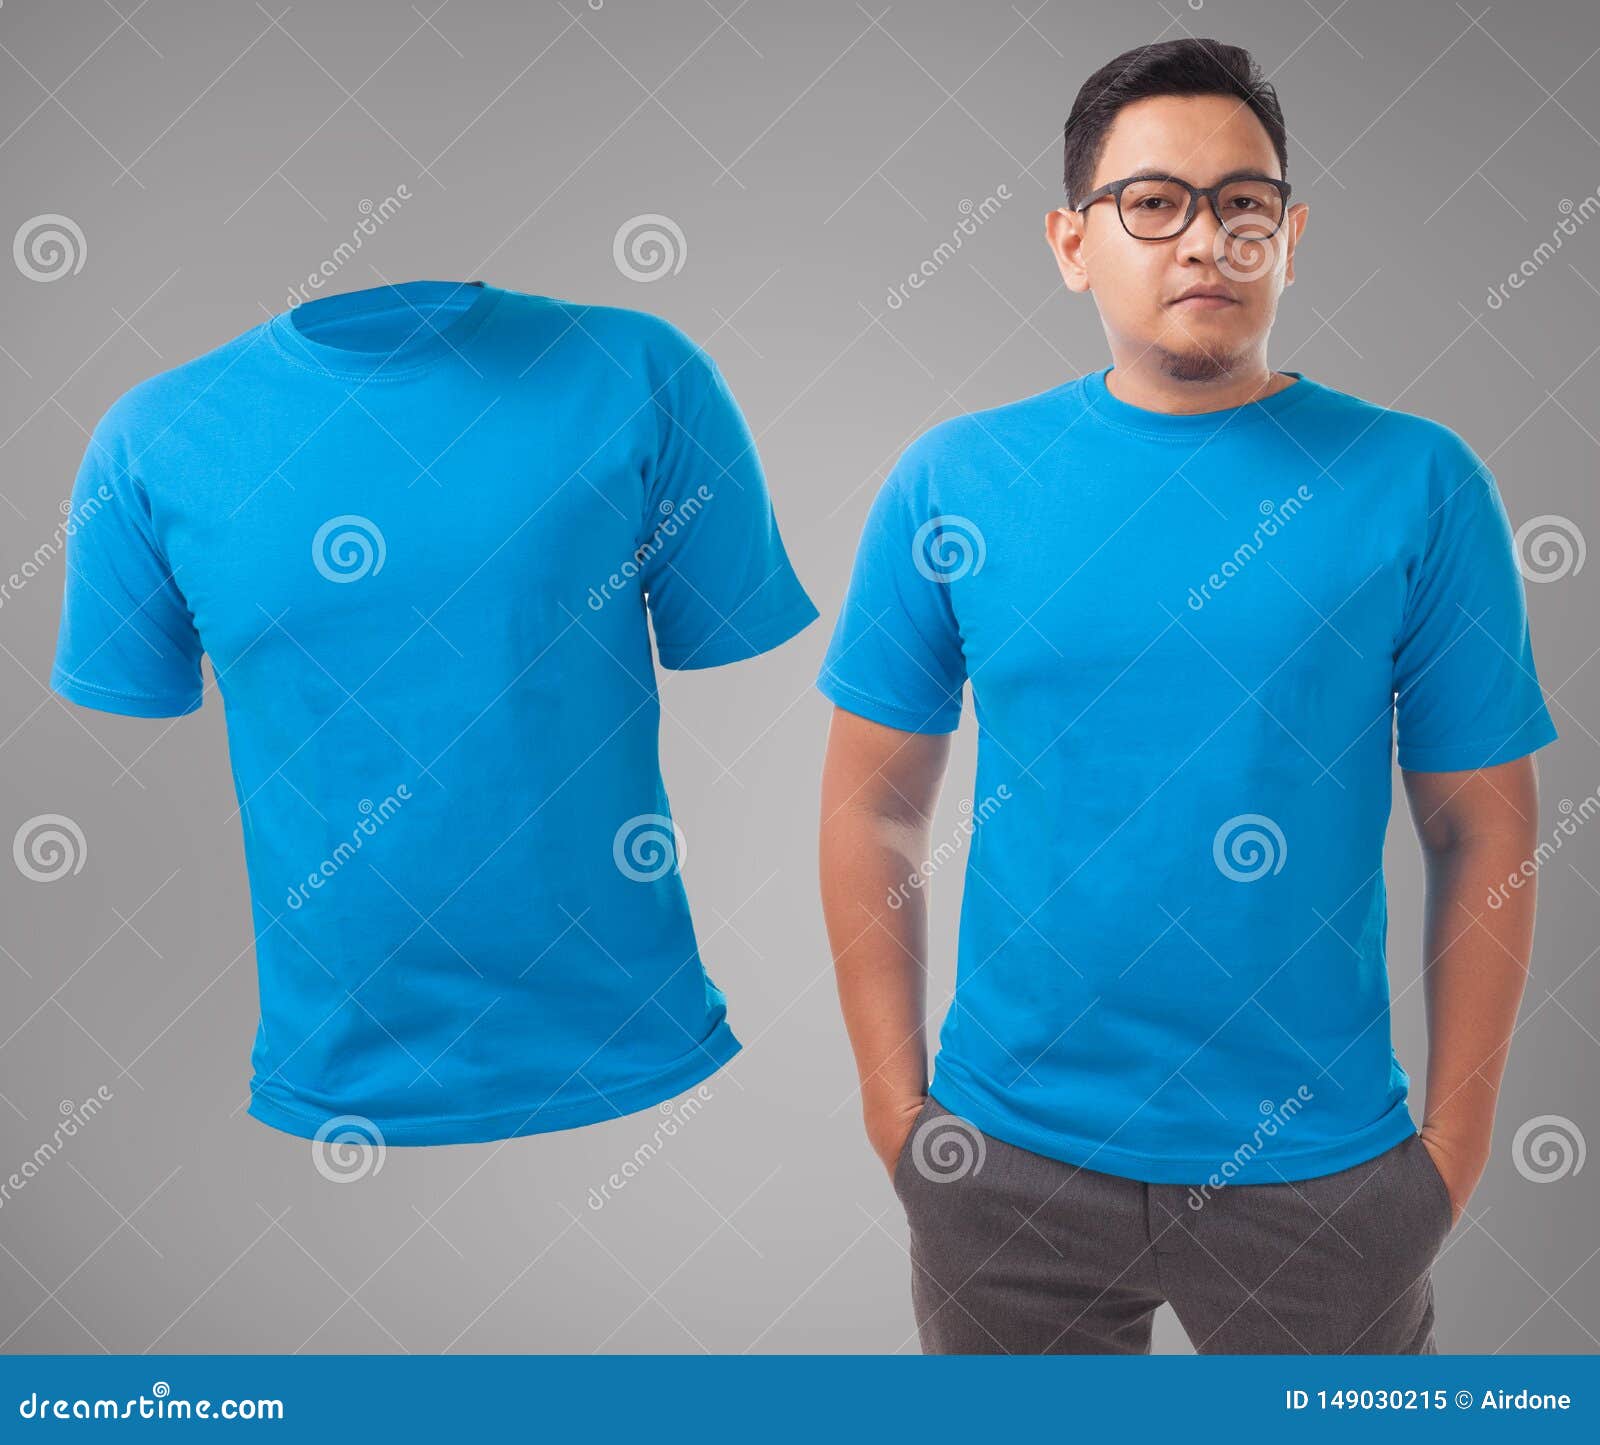 Blue Shirt Design Template stock image. Image of sleeve - 149030215